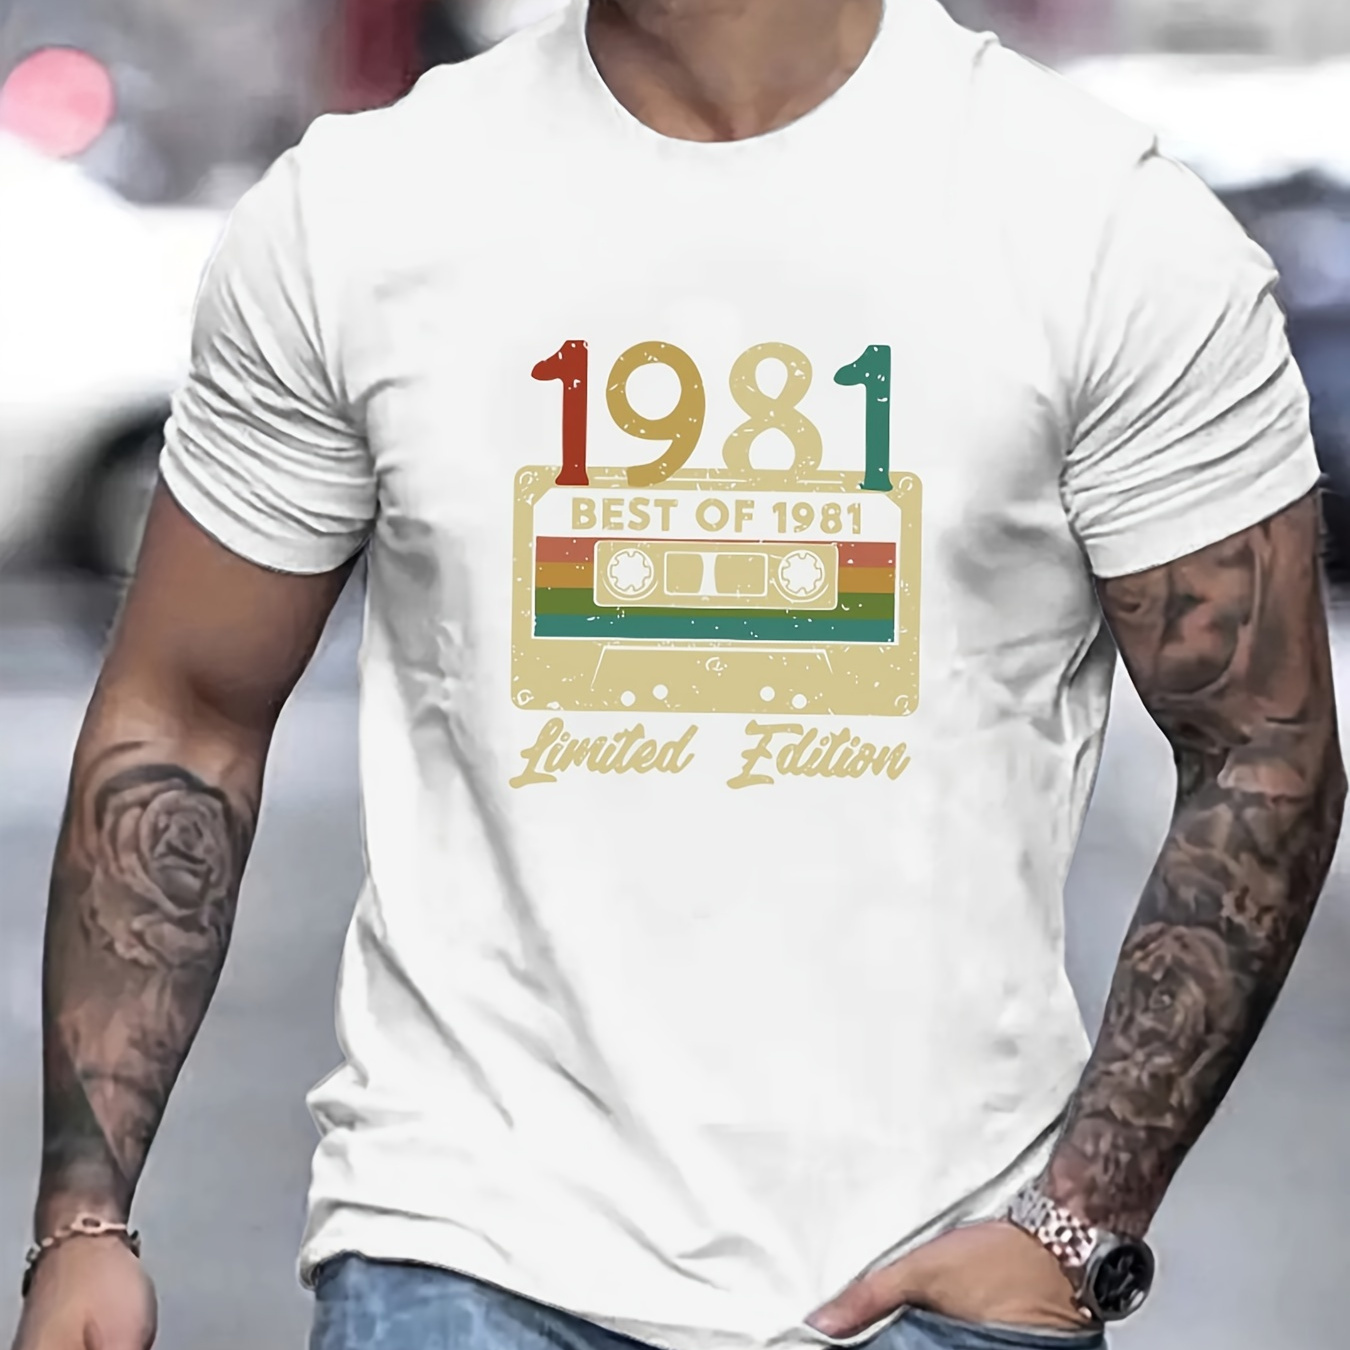 

1981 Print T Shirt, Tees For Men, Casual Short Sleeve T-shirt For Summer